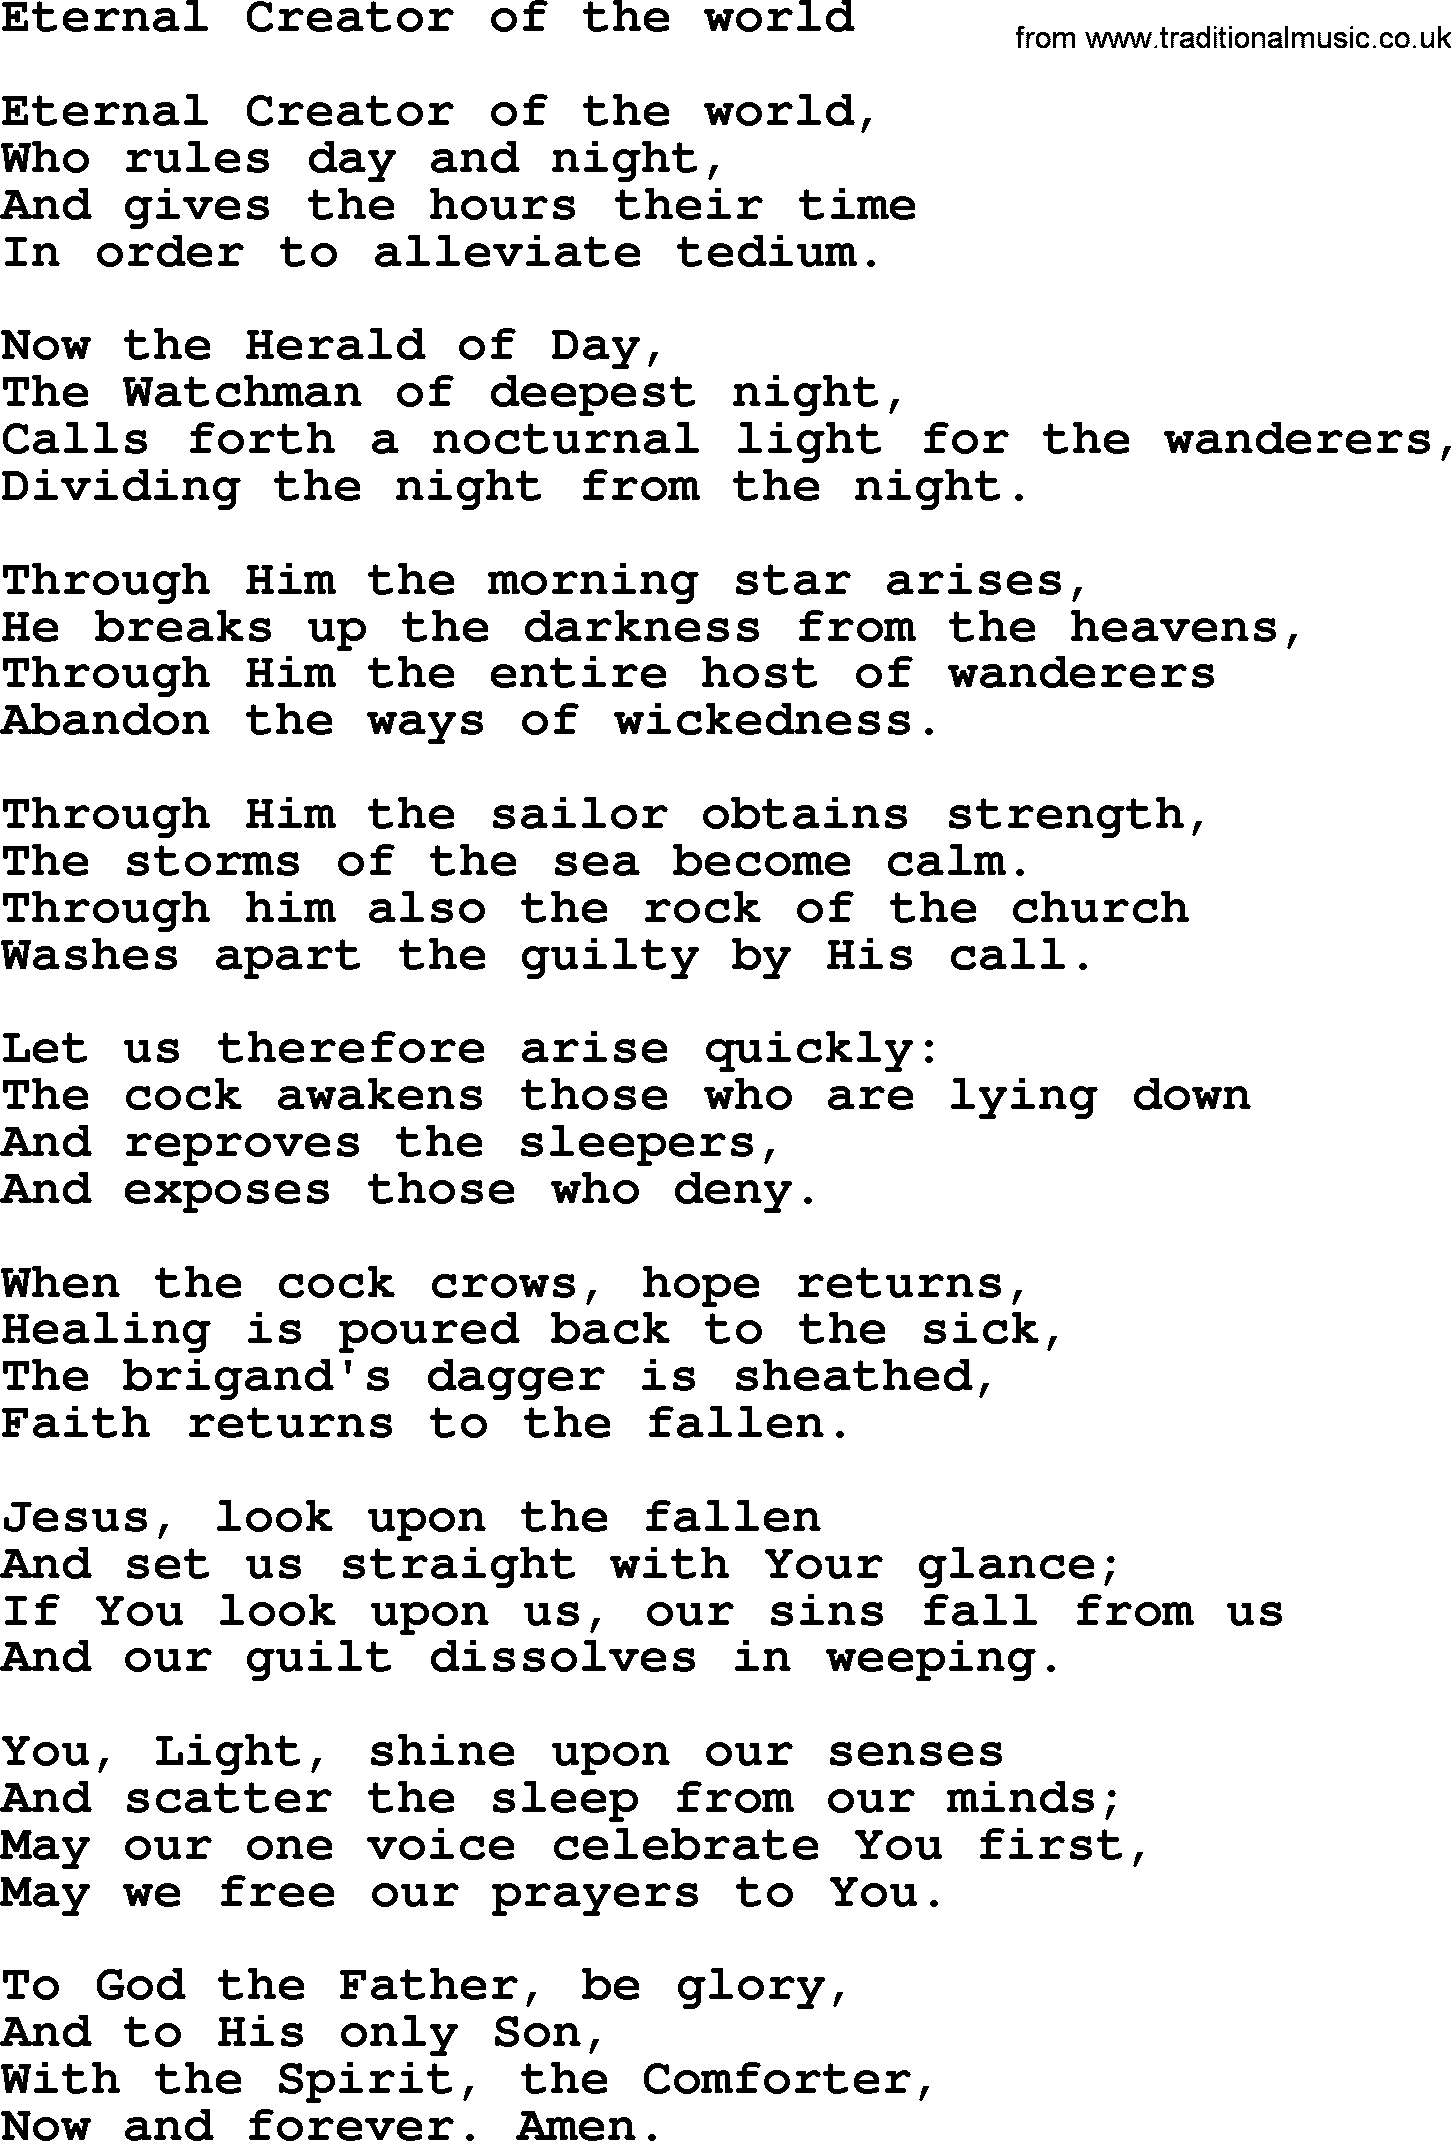 Catholic Hymn: Eternal Creator Of The World lyrics with PDF